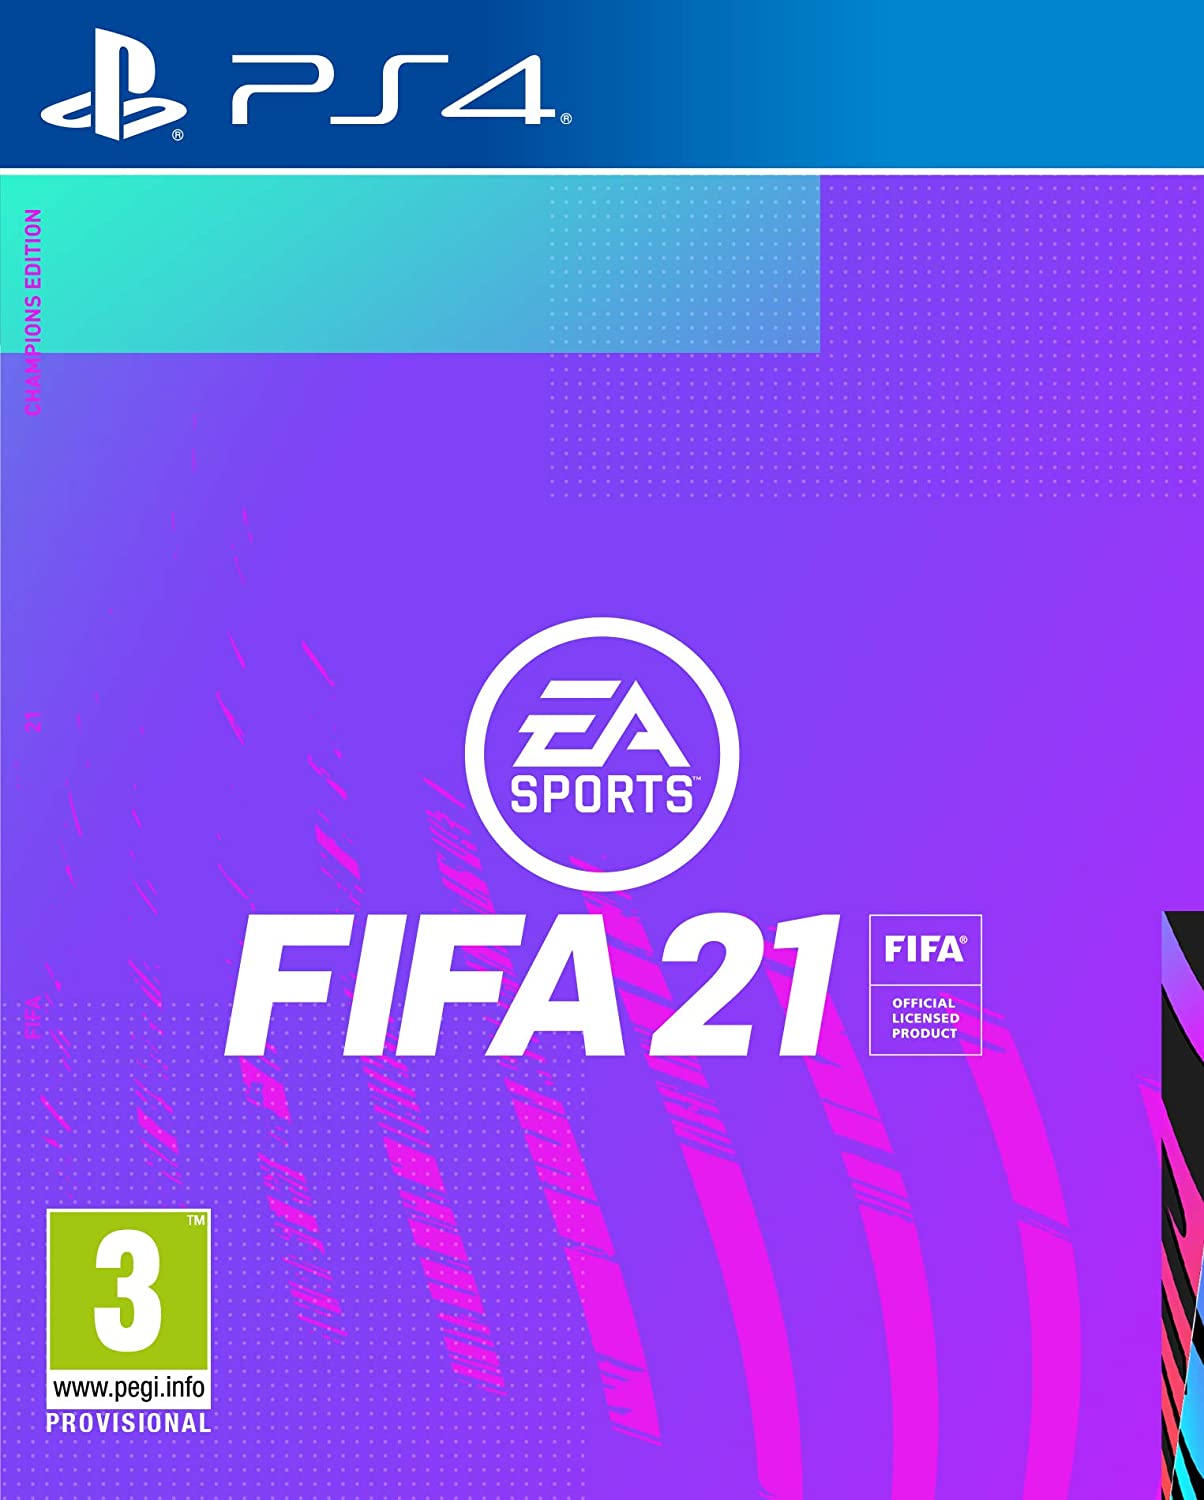 FIFA 21 (Dual Entitlement)